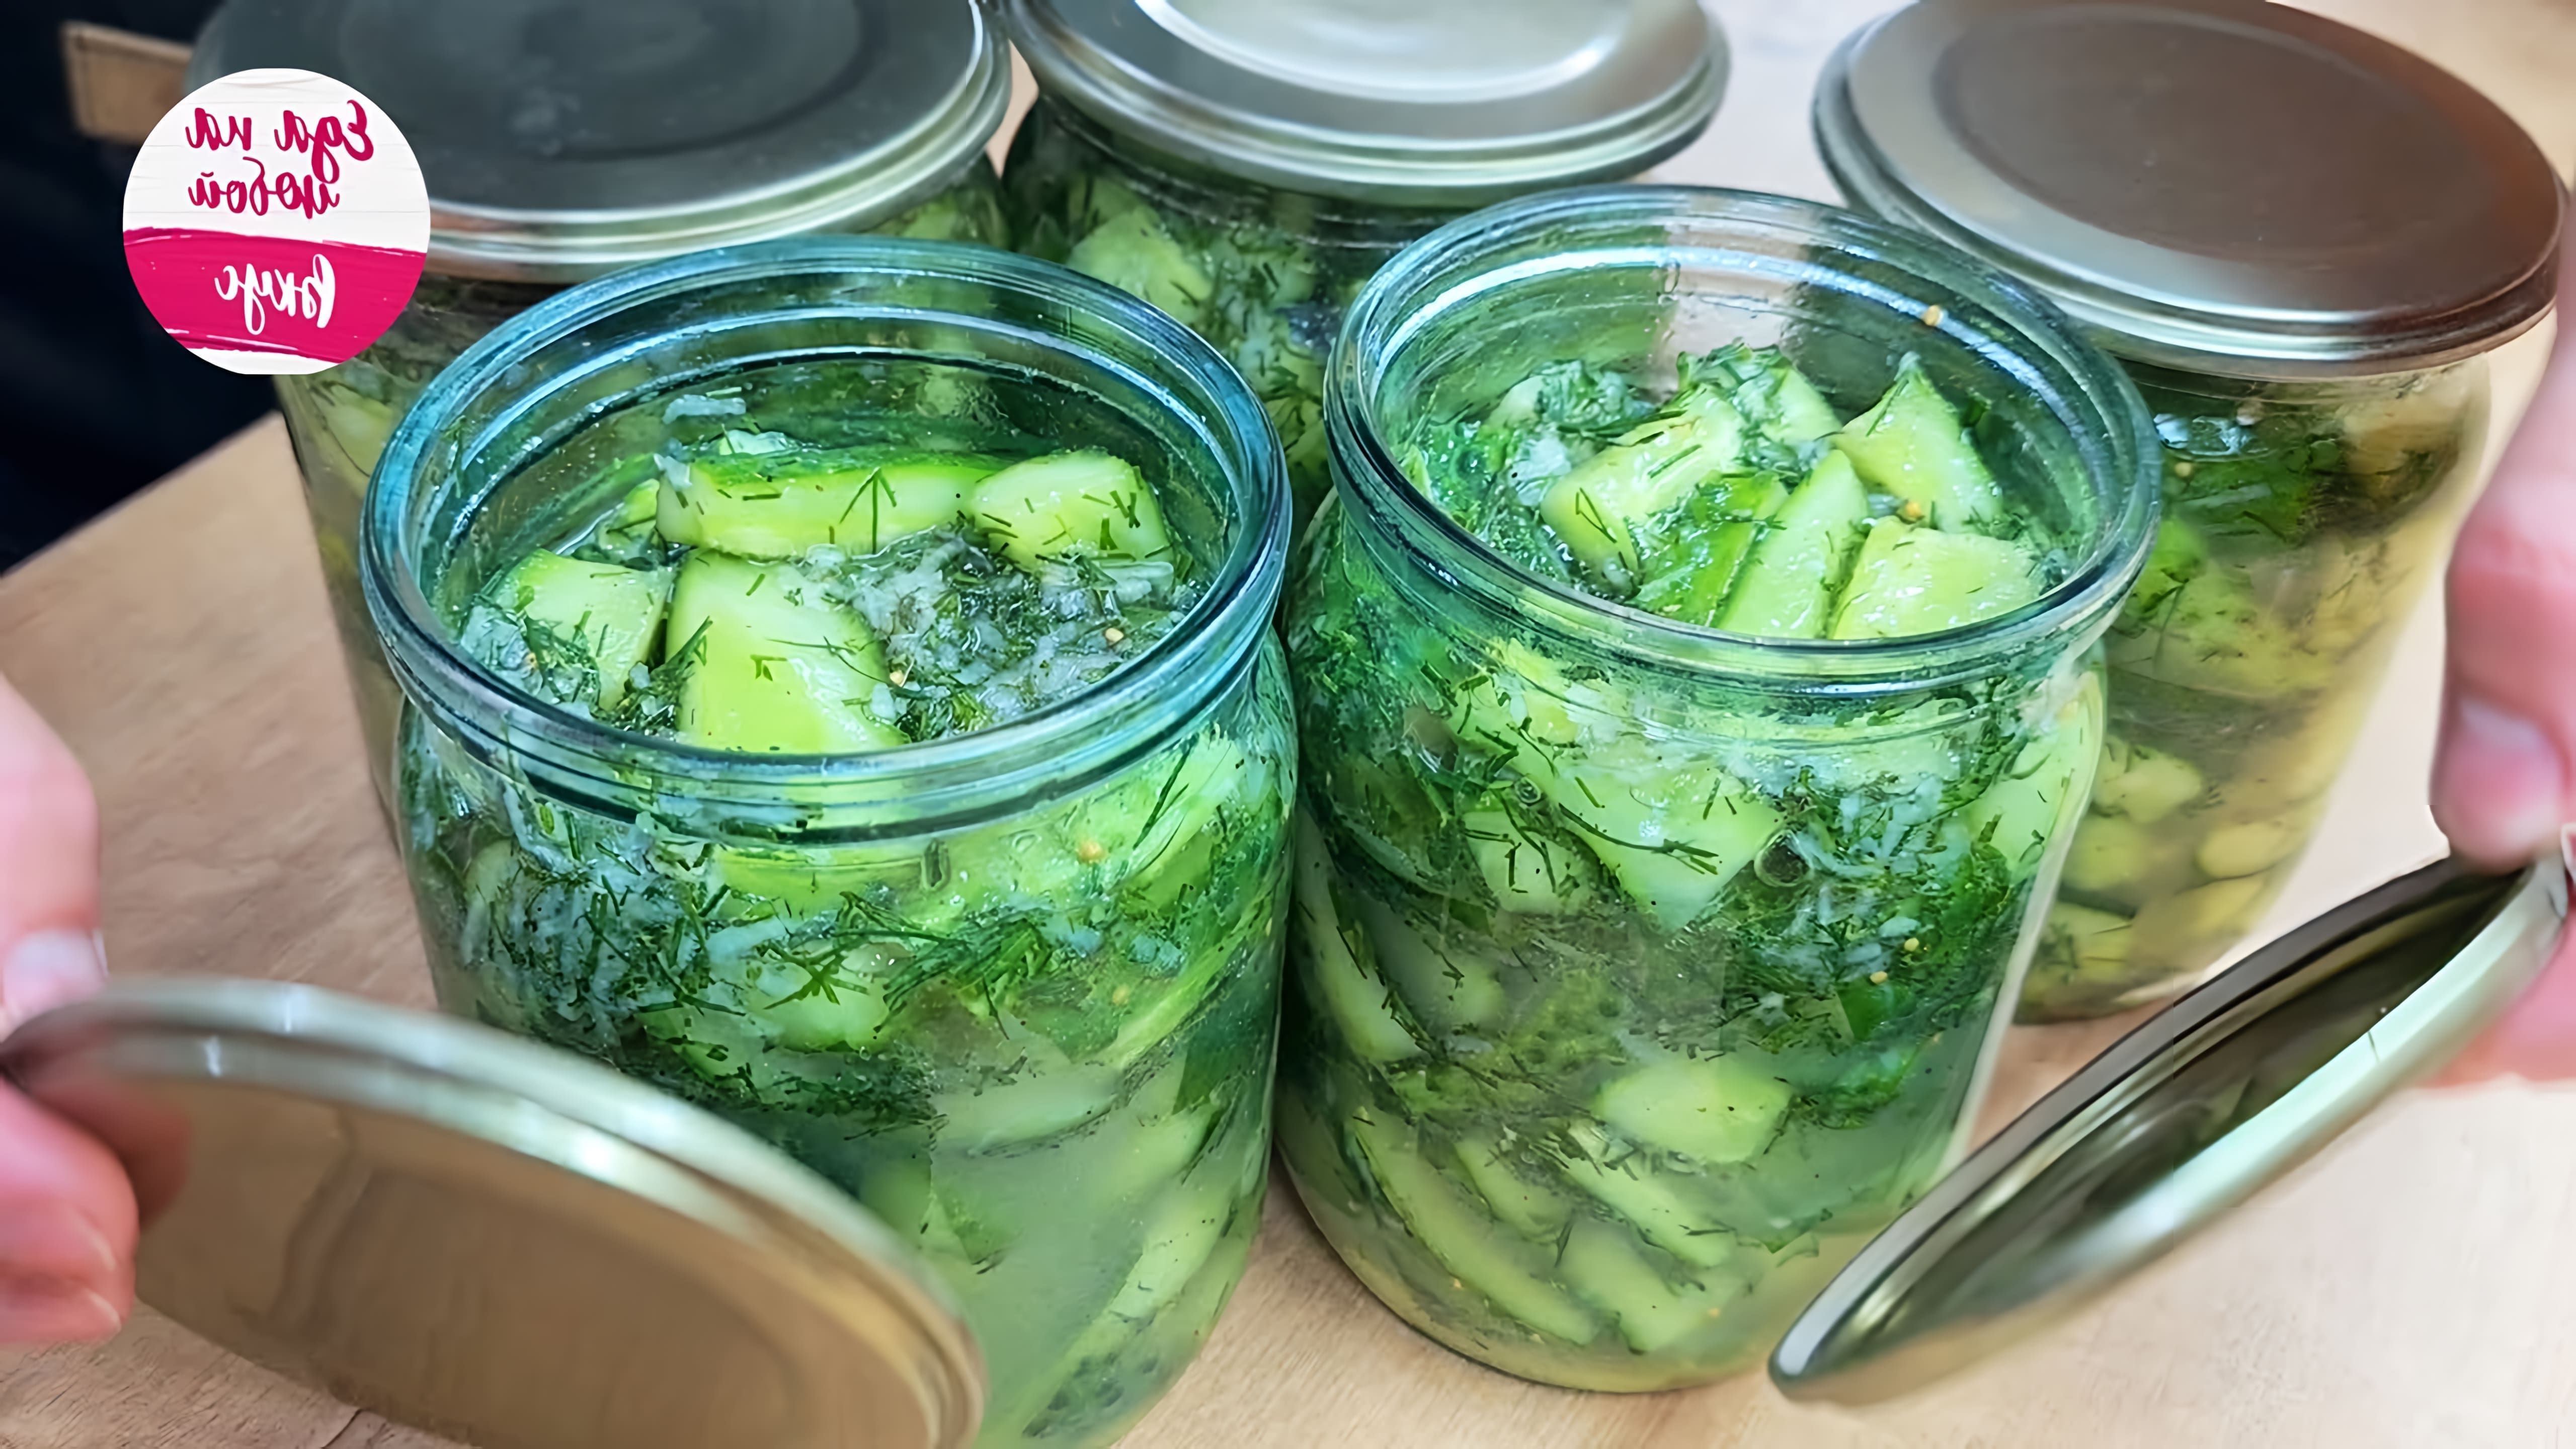 Видео рецепт свежего маринованного салата из огурцов под названием "молодо-зелено", который предназначен для хранения на зиму